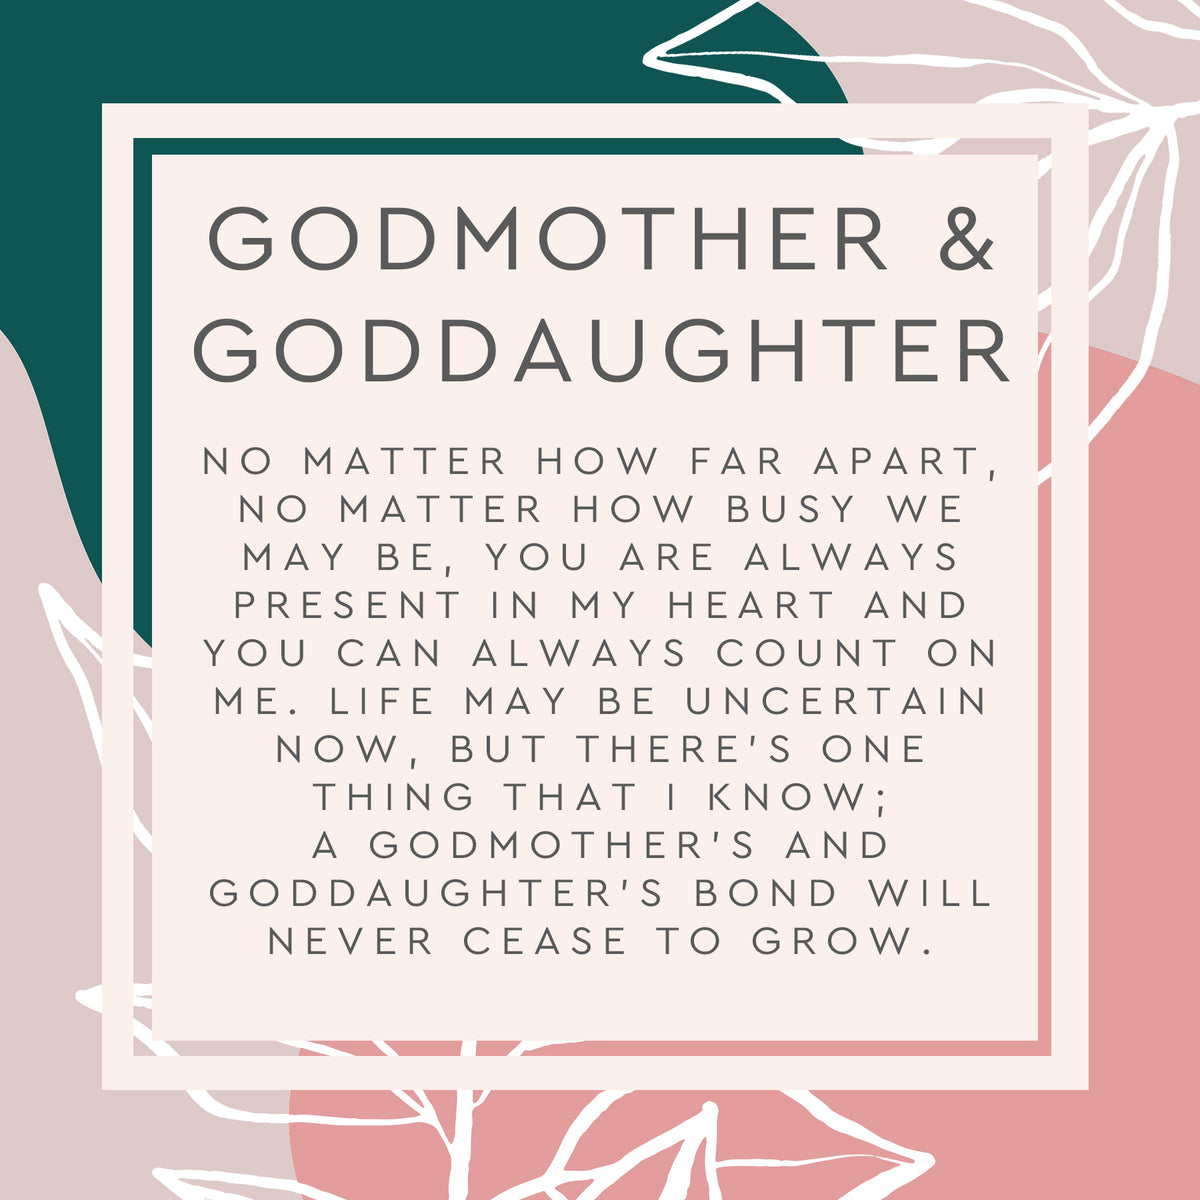 Godmother-Goddaughter Spa Gift Box